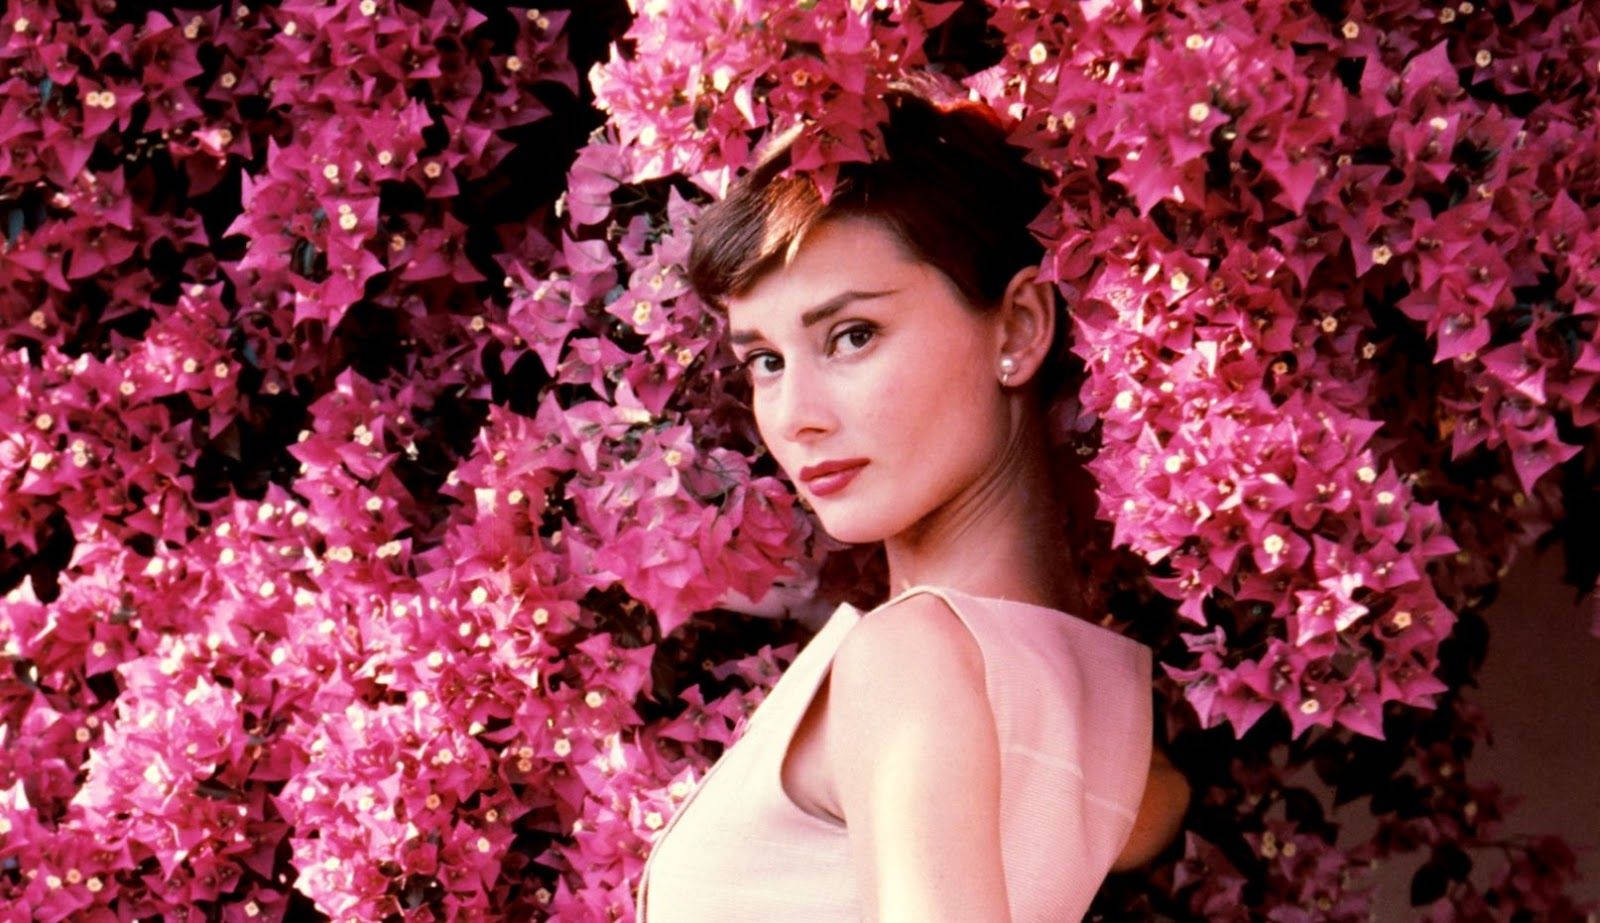 Audrey Hepburn 1600X923 Wallpaper and Background Image